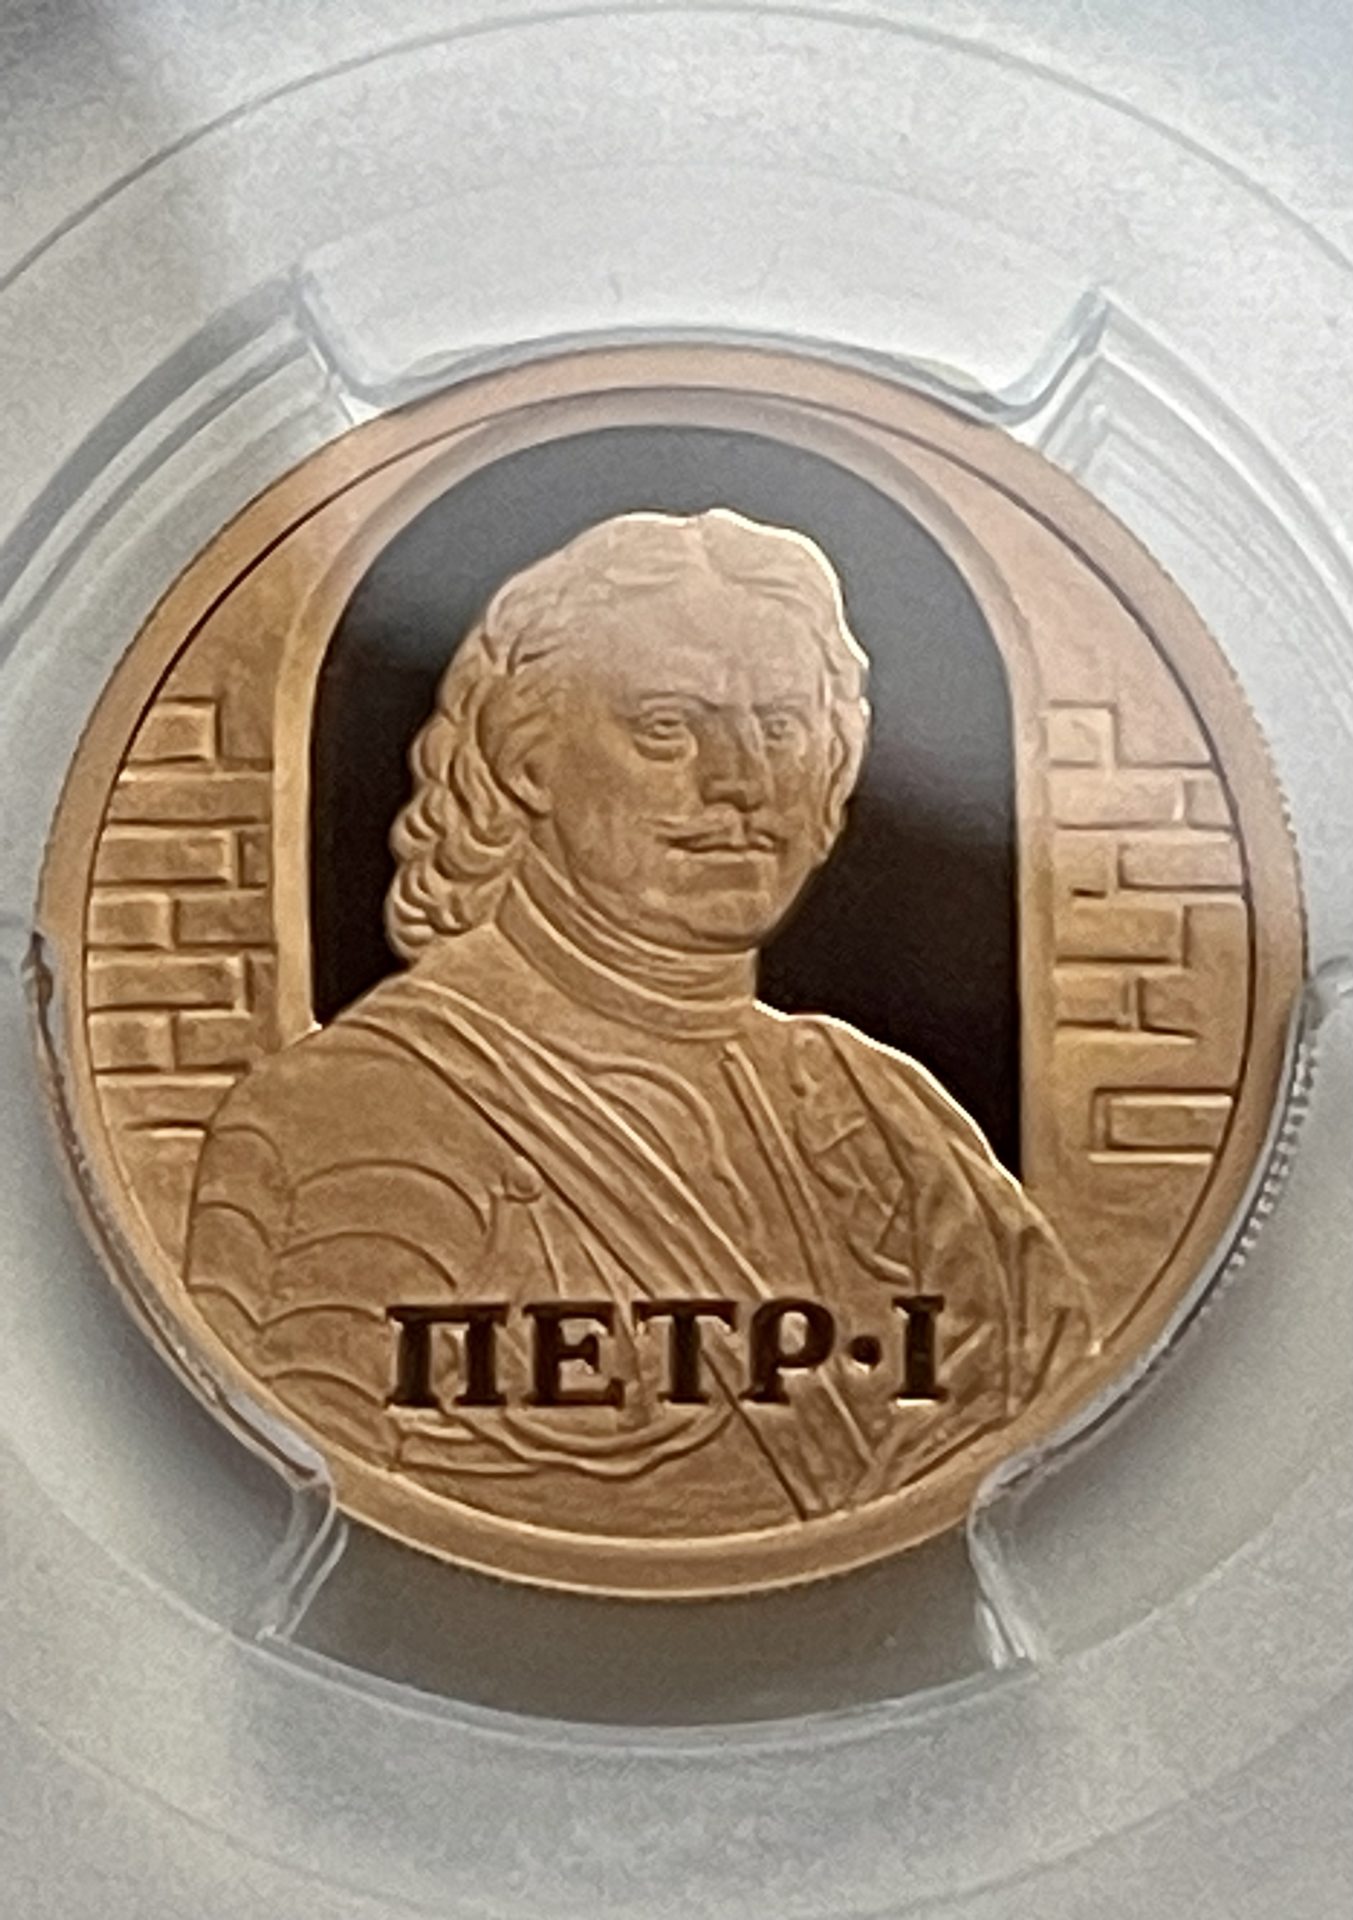 50 rubles Peter I. 2003